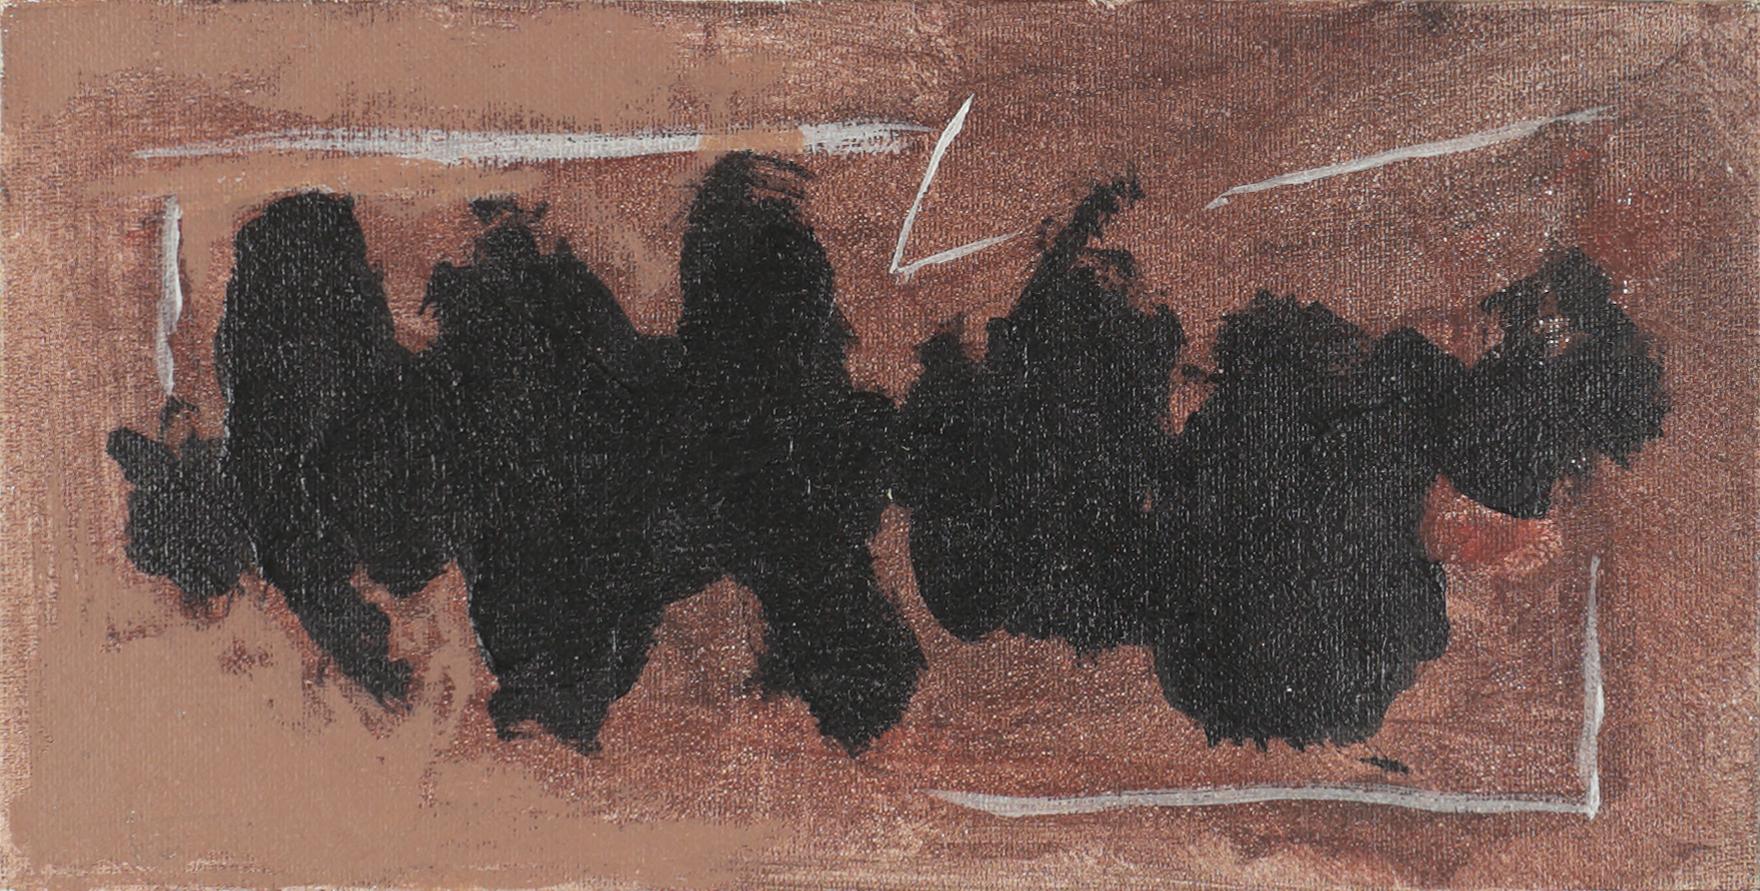 Abstract Painting Robert Motherwell - Esquisse d'élégie